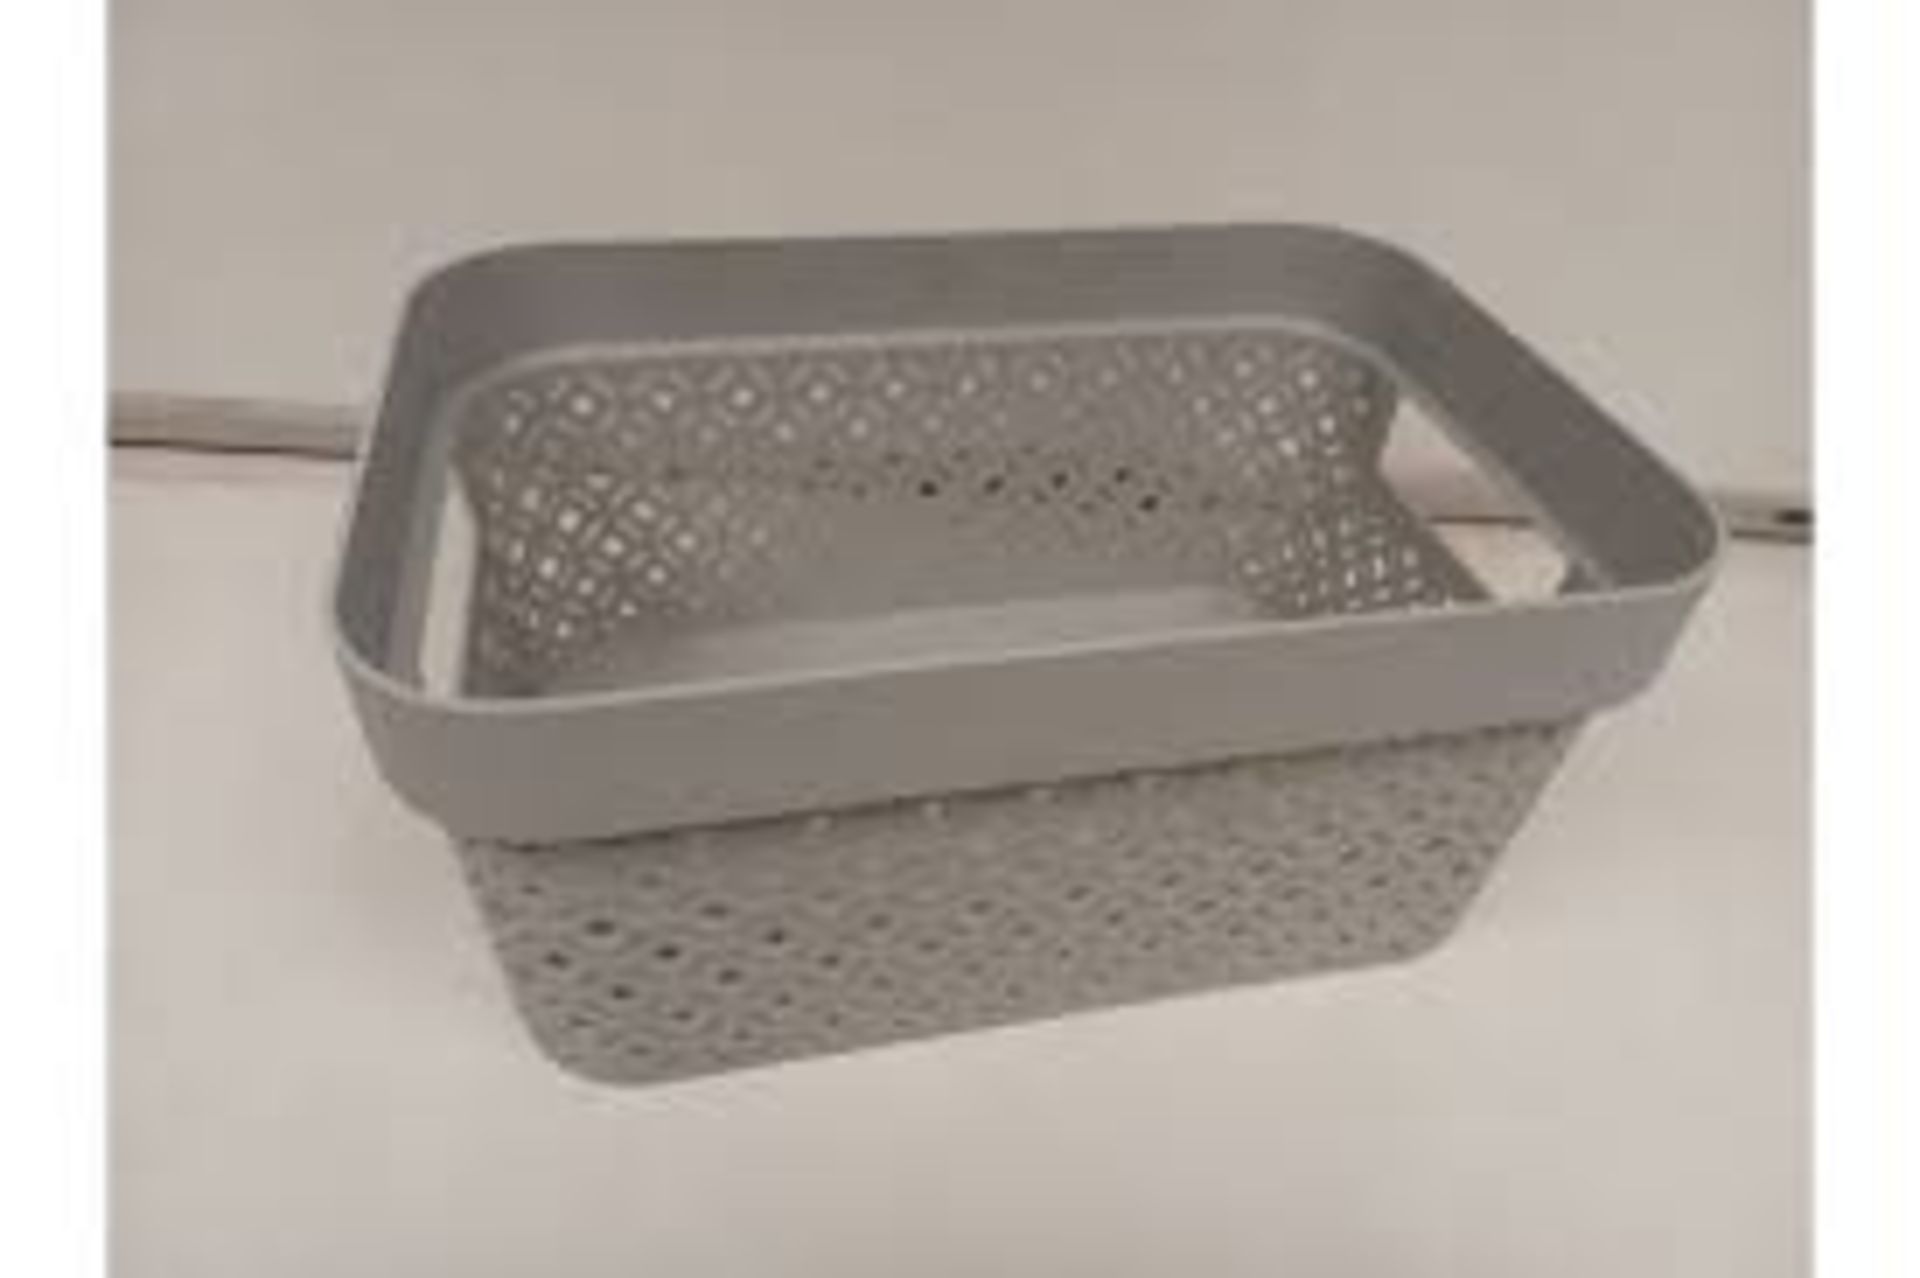 40 x New Curver Terazzo Storage Basket - 4.5L - Grey. (253428). Good ventilation Modular shapes so